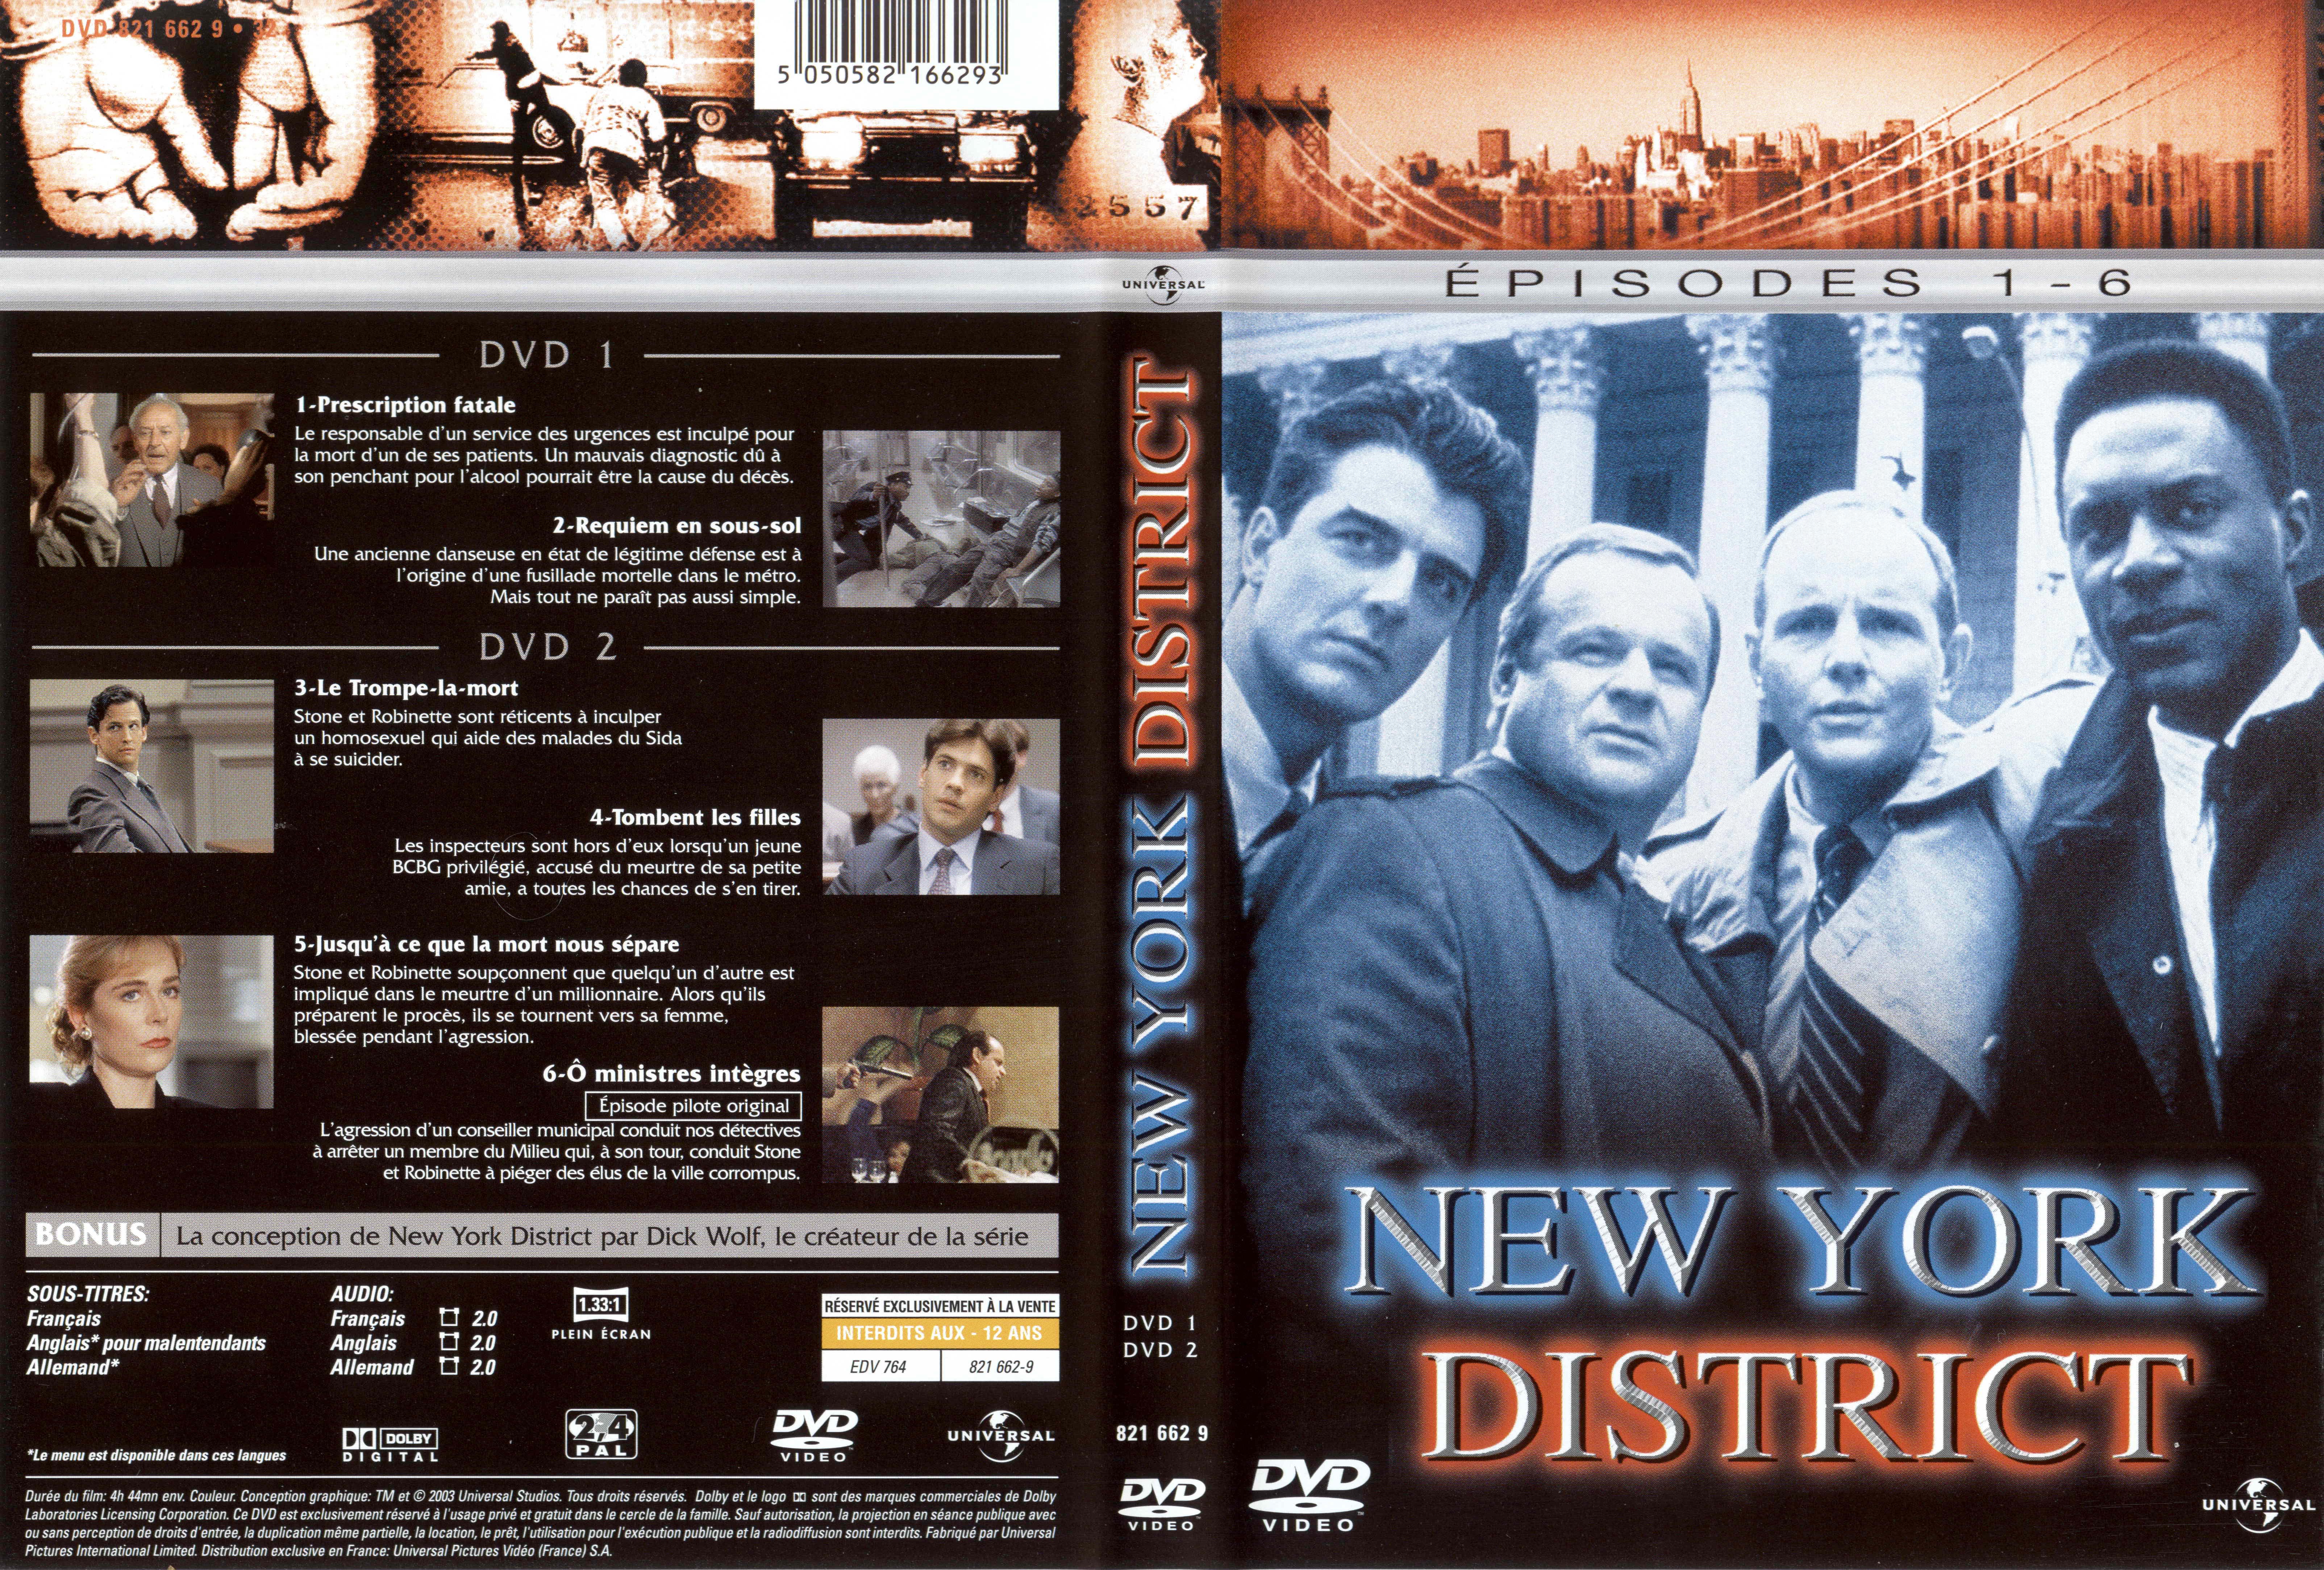 Jaquette DVD New York district Saison 1 DVD 1